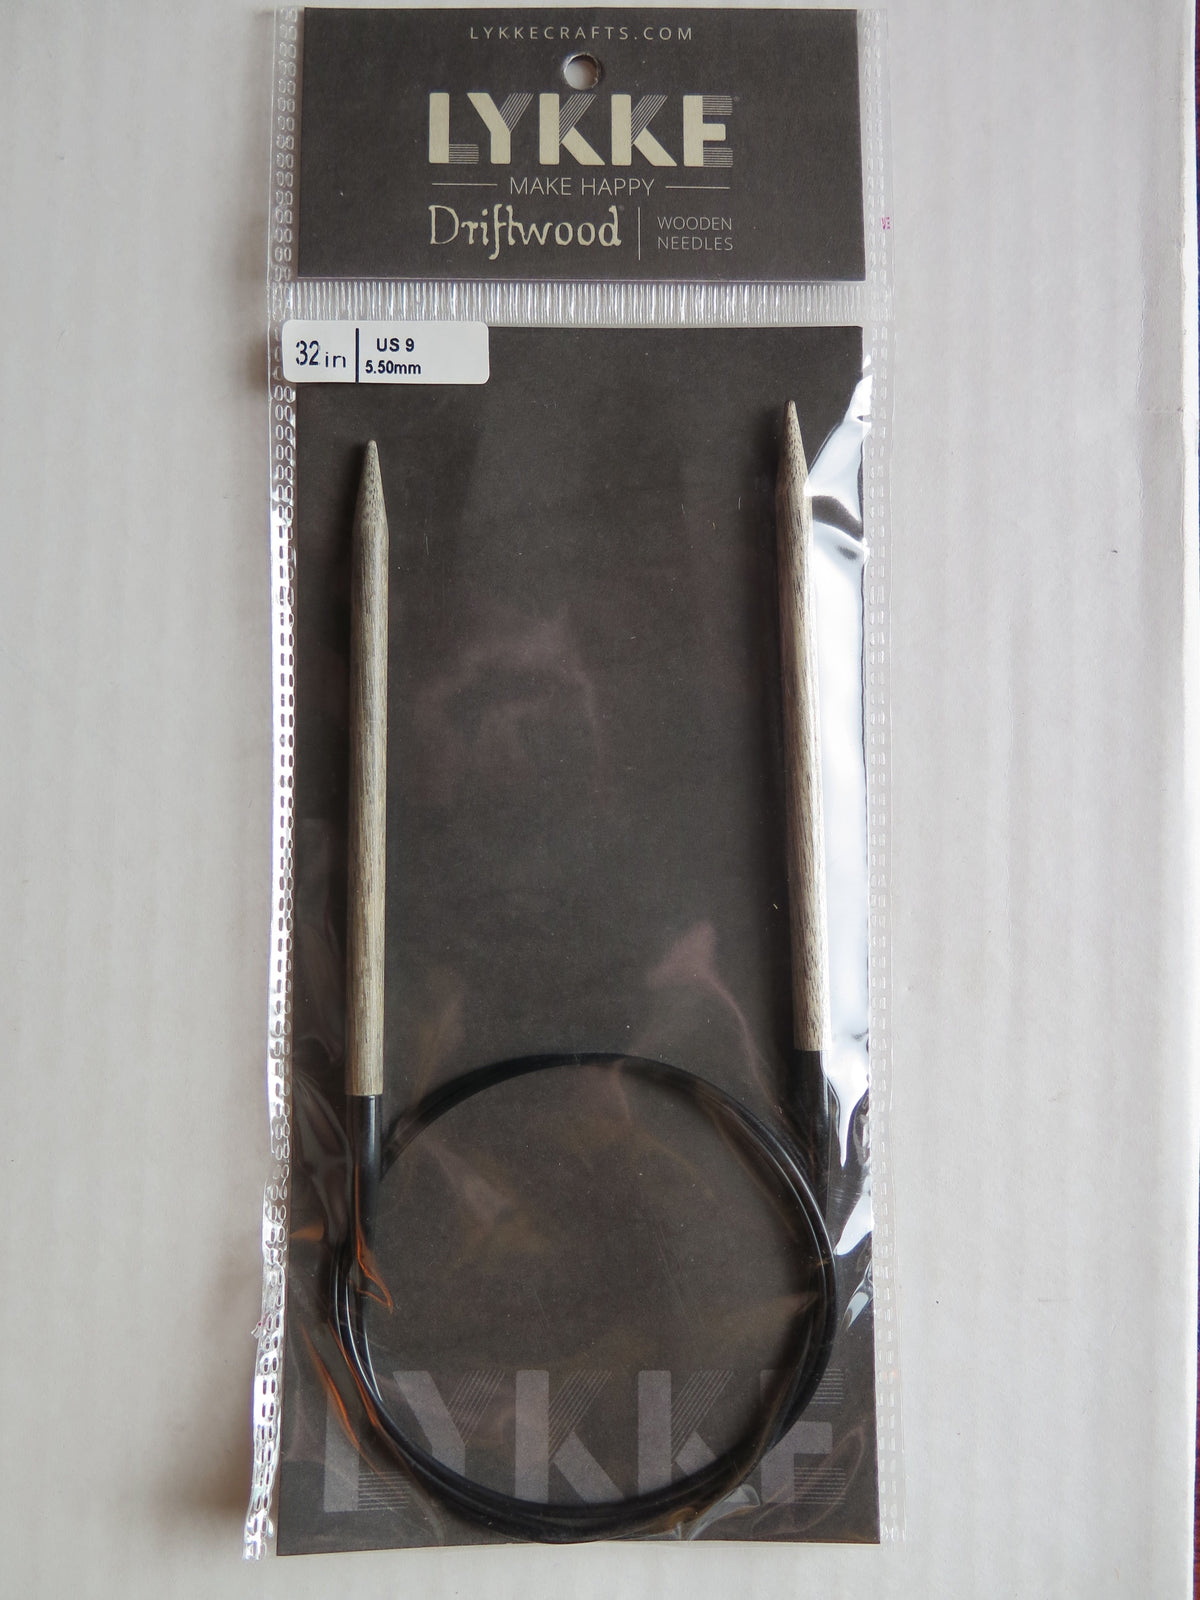 Lykke Driftwood 32in US9 5.50mm Circular Needle